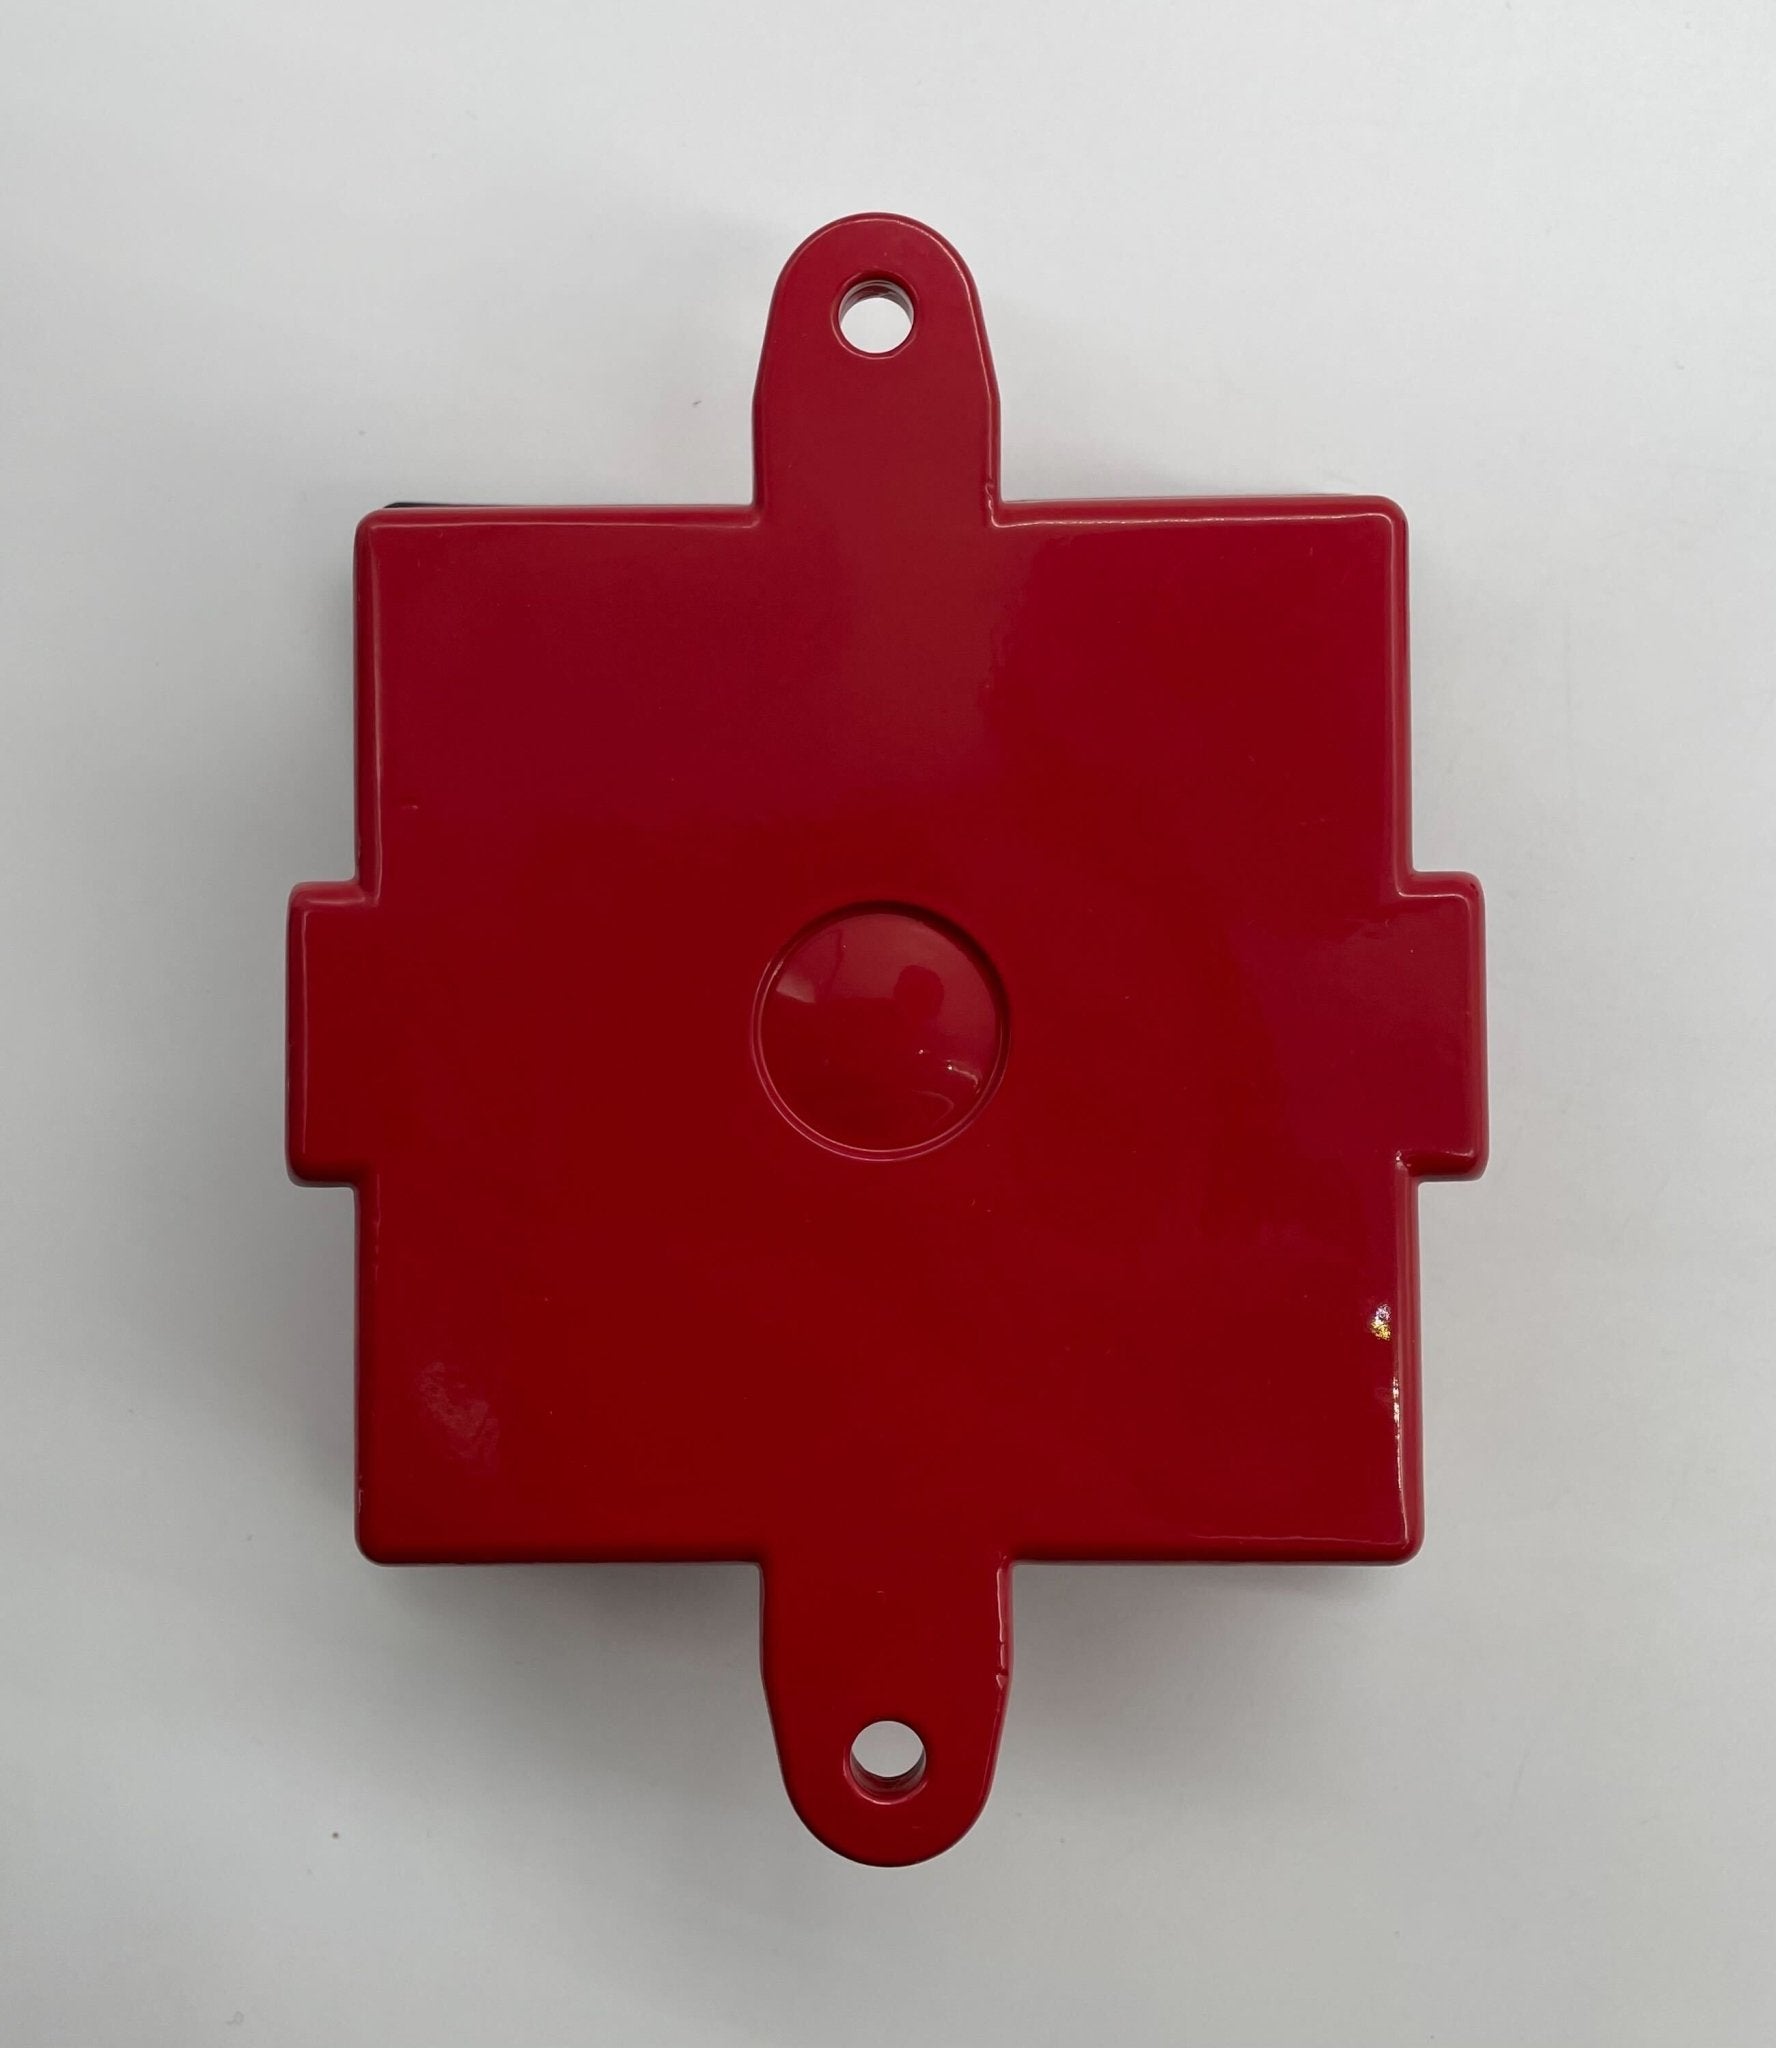 System Sensor WBB Weatherproof Back-Box - The Fire Alarm Supplier